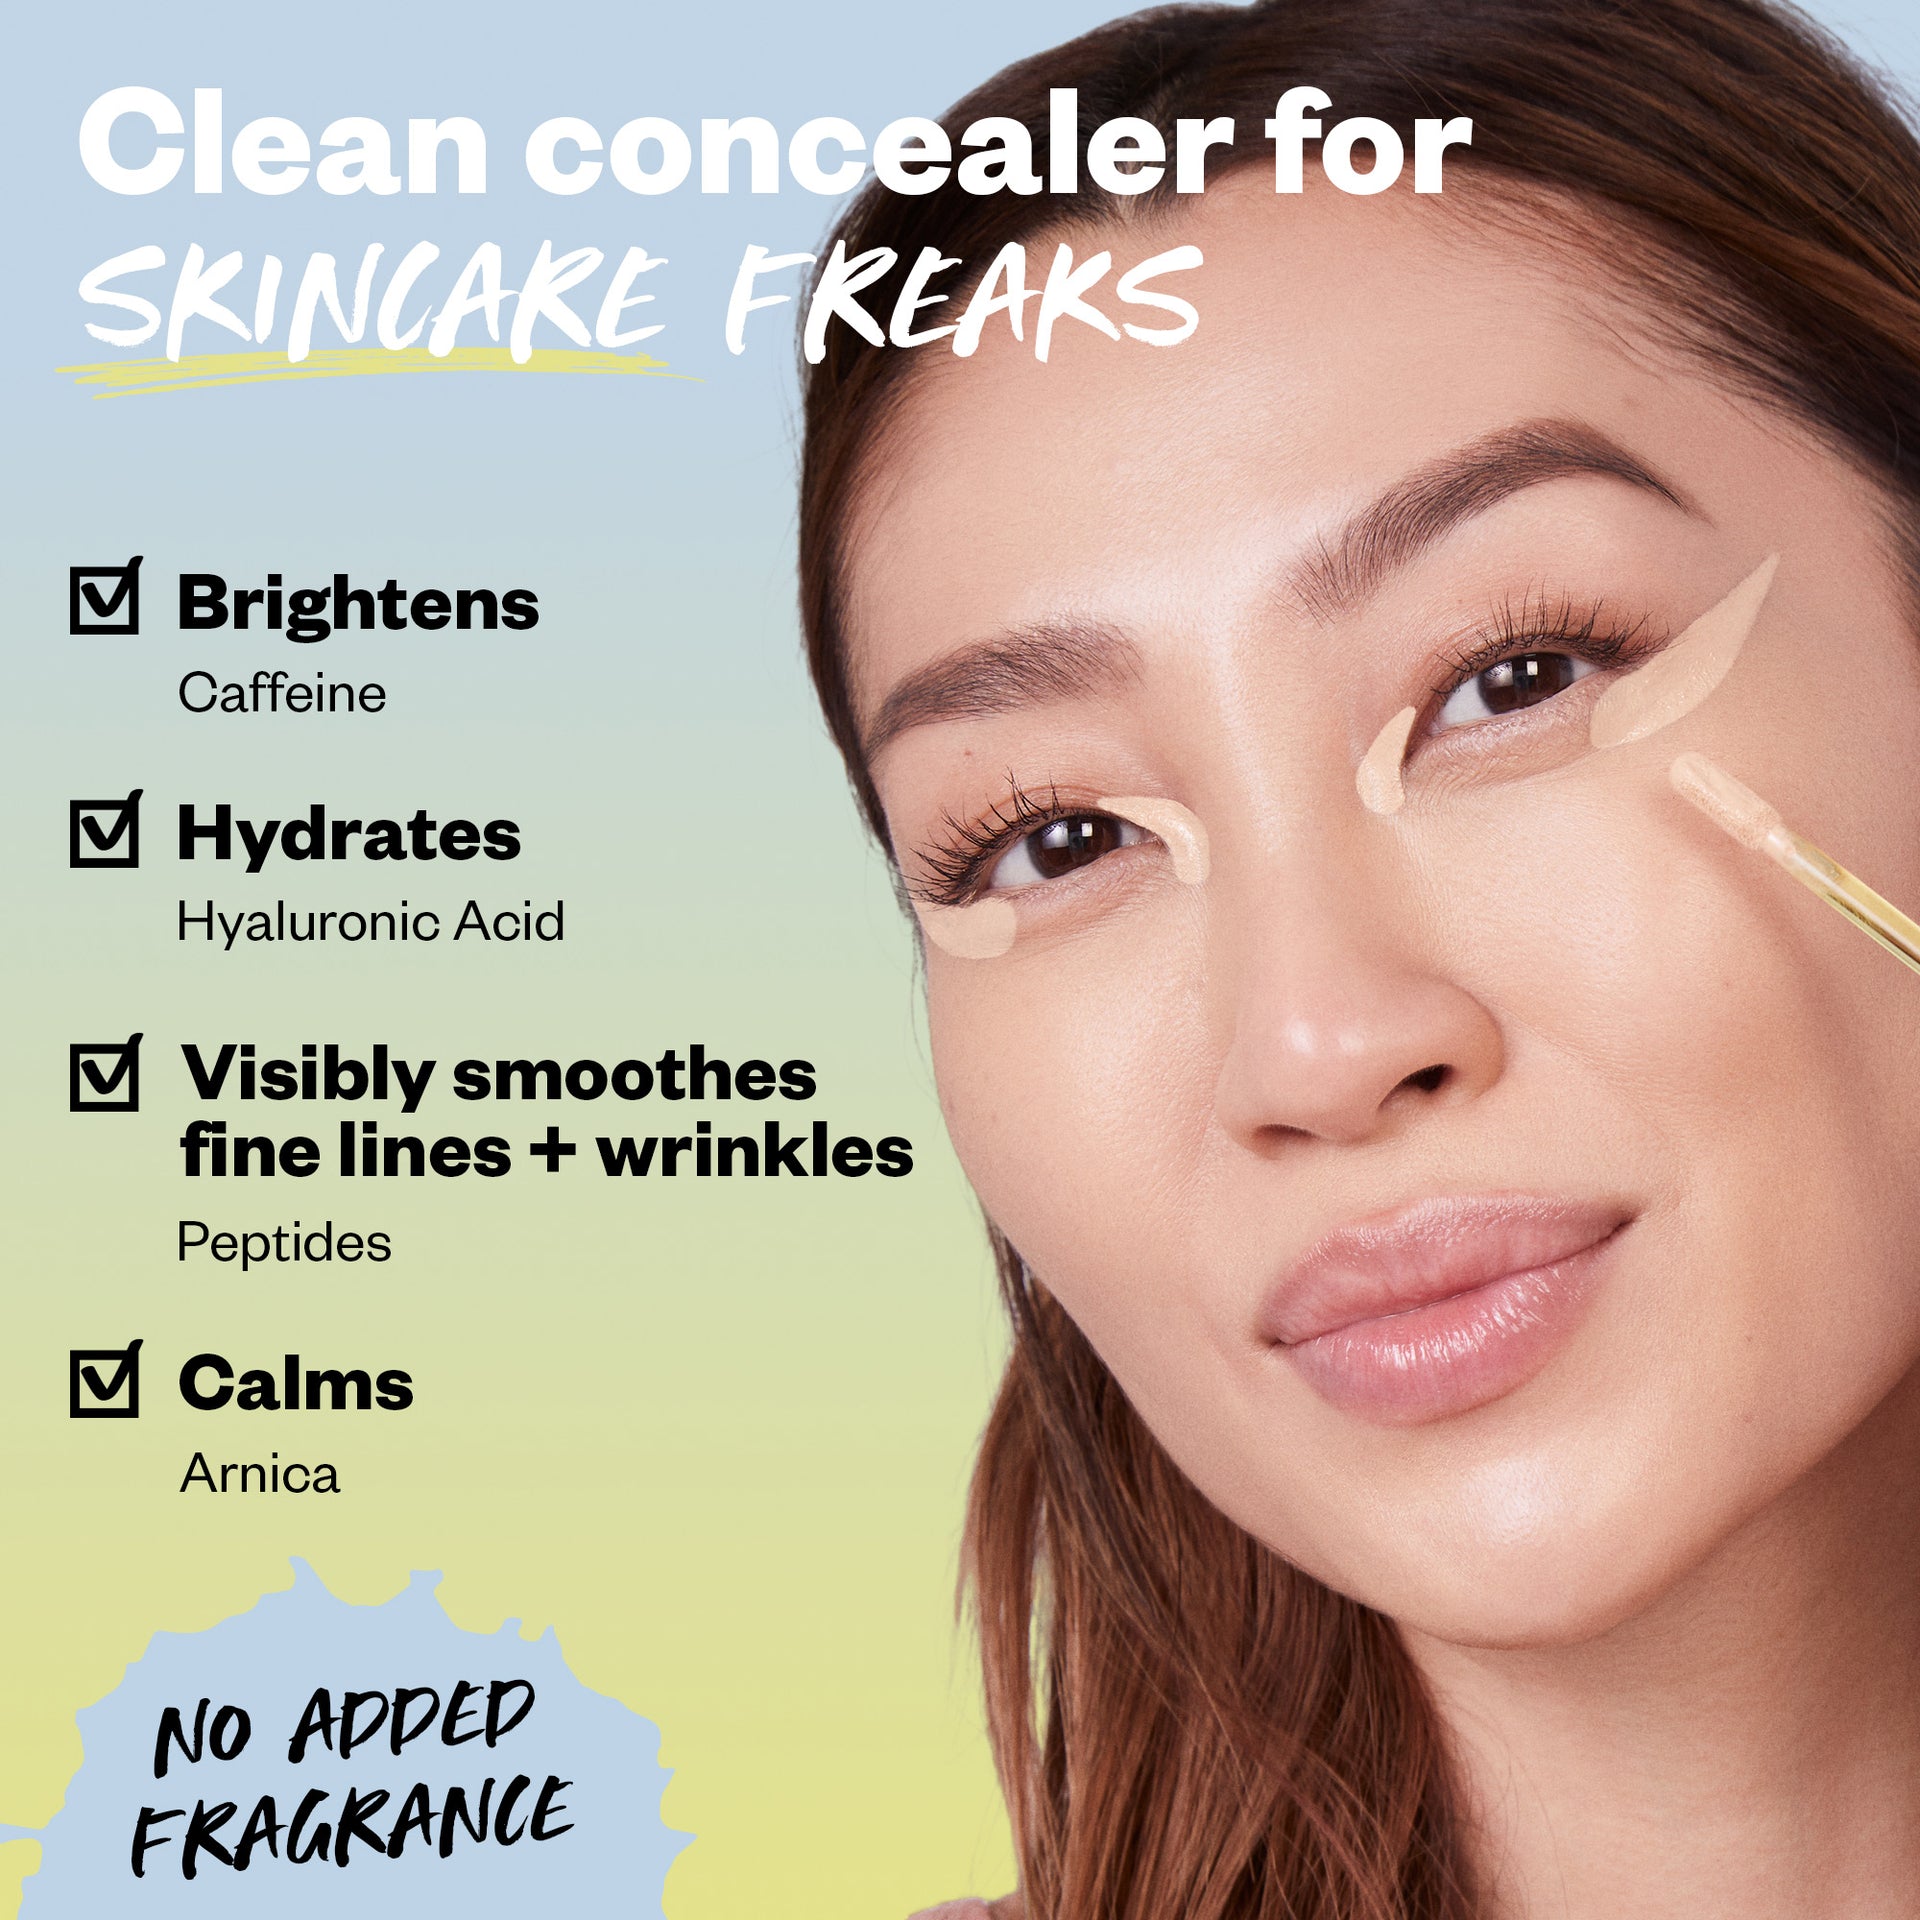 Clean concealer benefits for skincare freaks